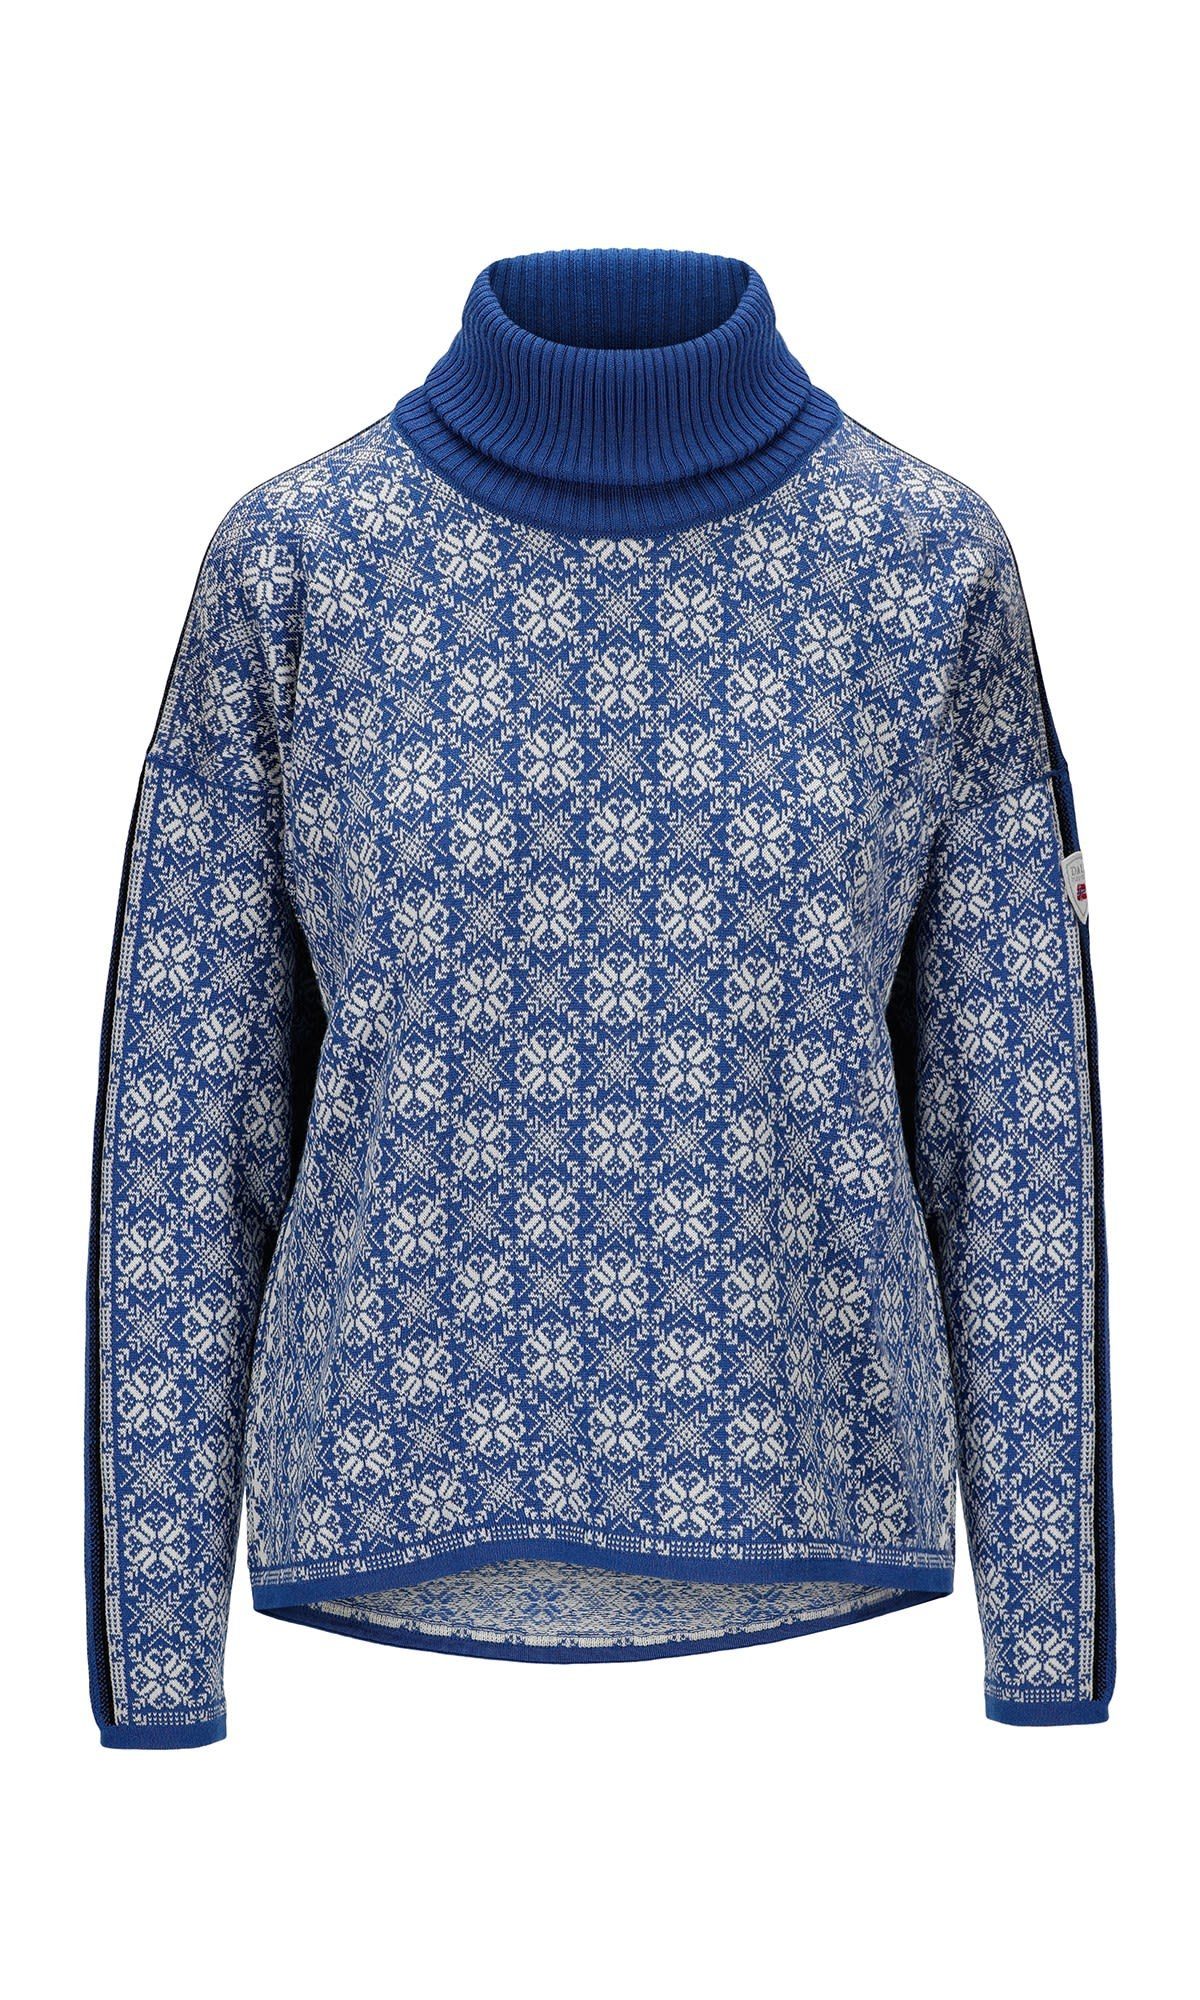 Ultramarine W Longpullover Sweater of Norway - Of Offwhite Dale Damen Frida Dale Norway